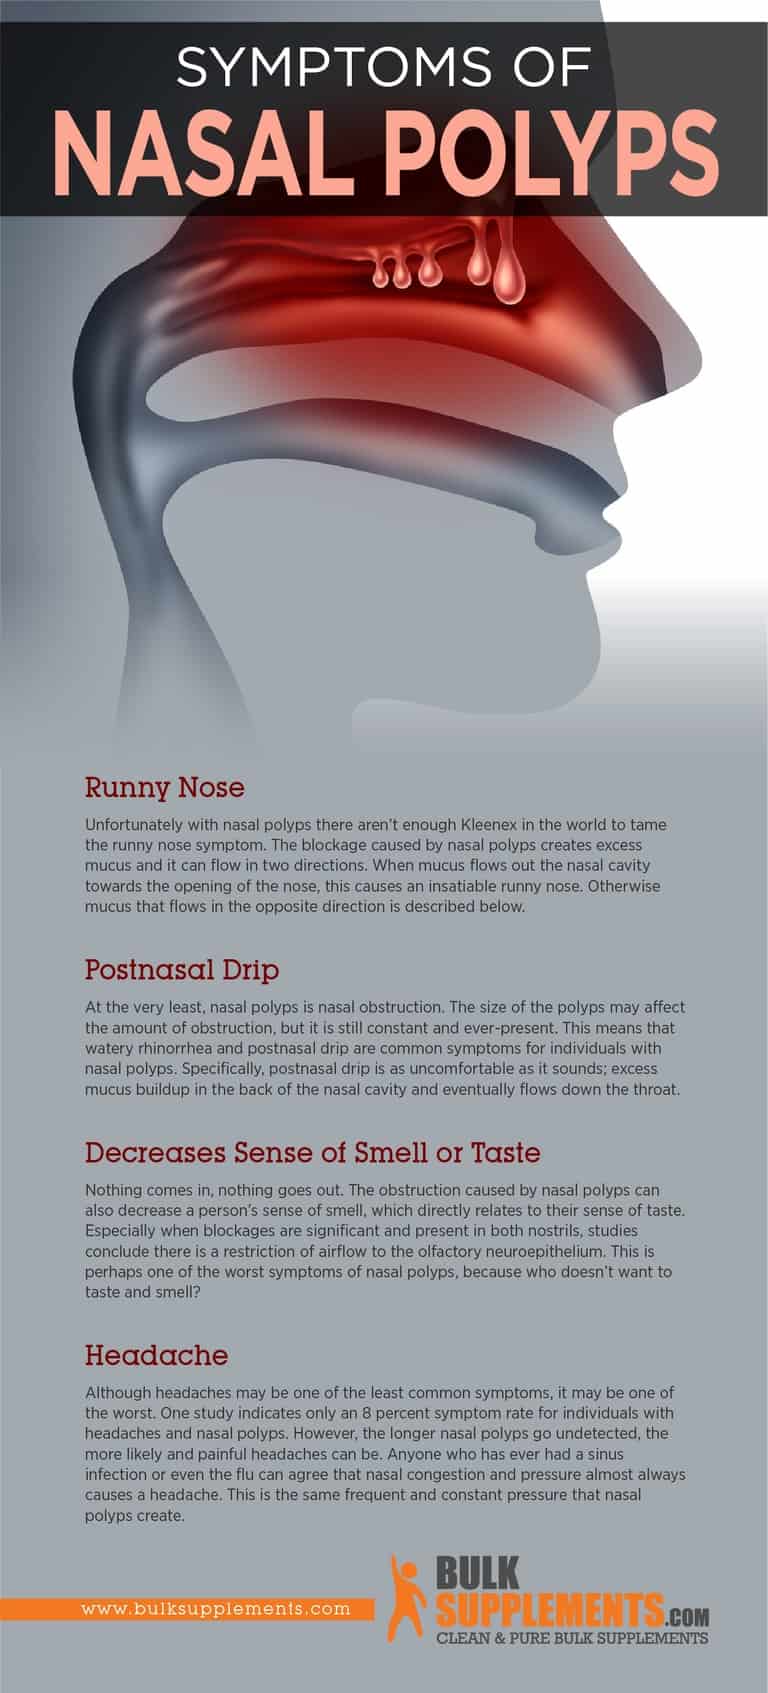 Nasal Polyps: Symptoms, Causes & Treatment by James Denlinger